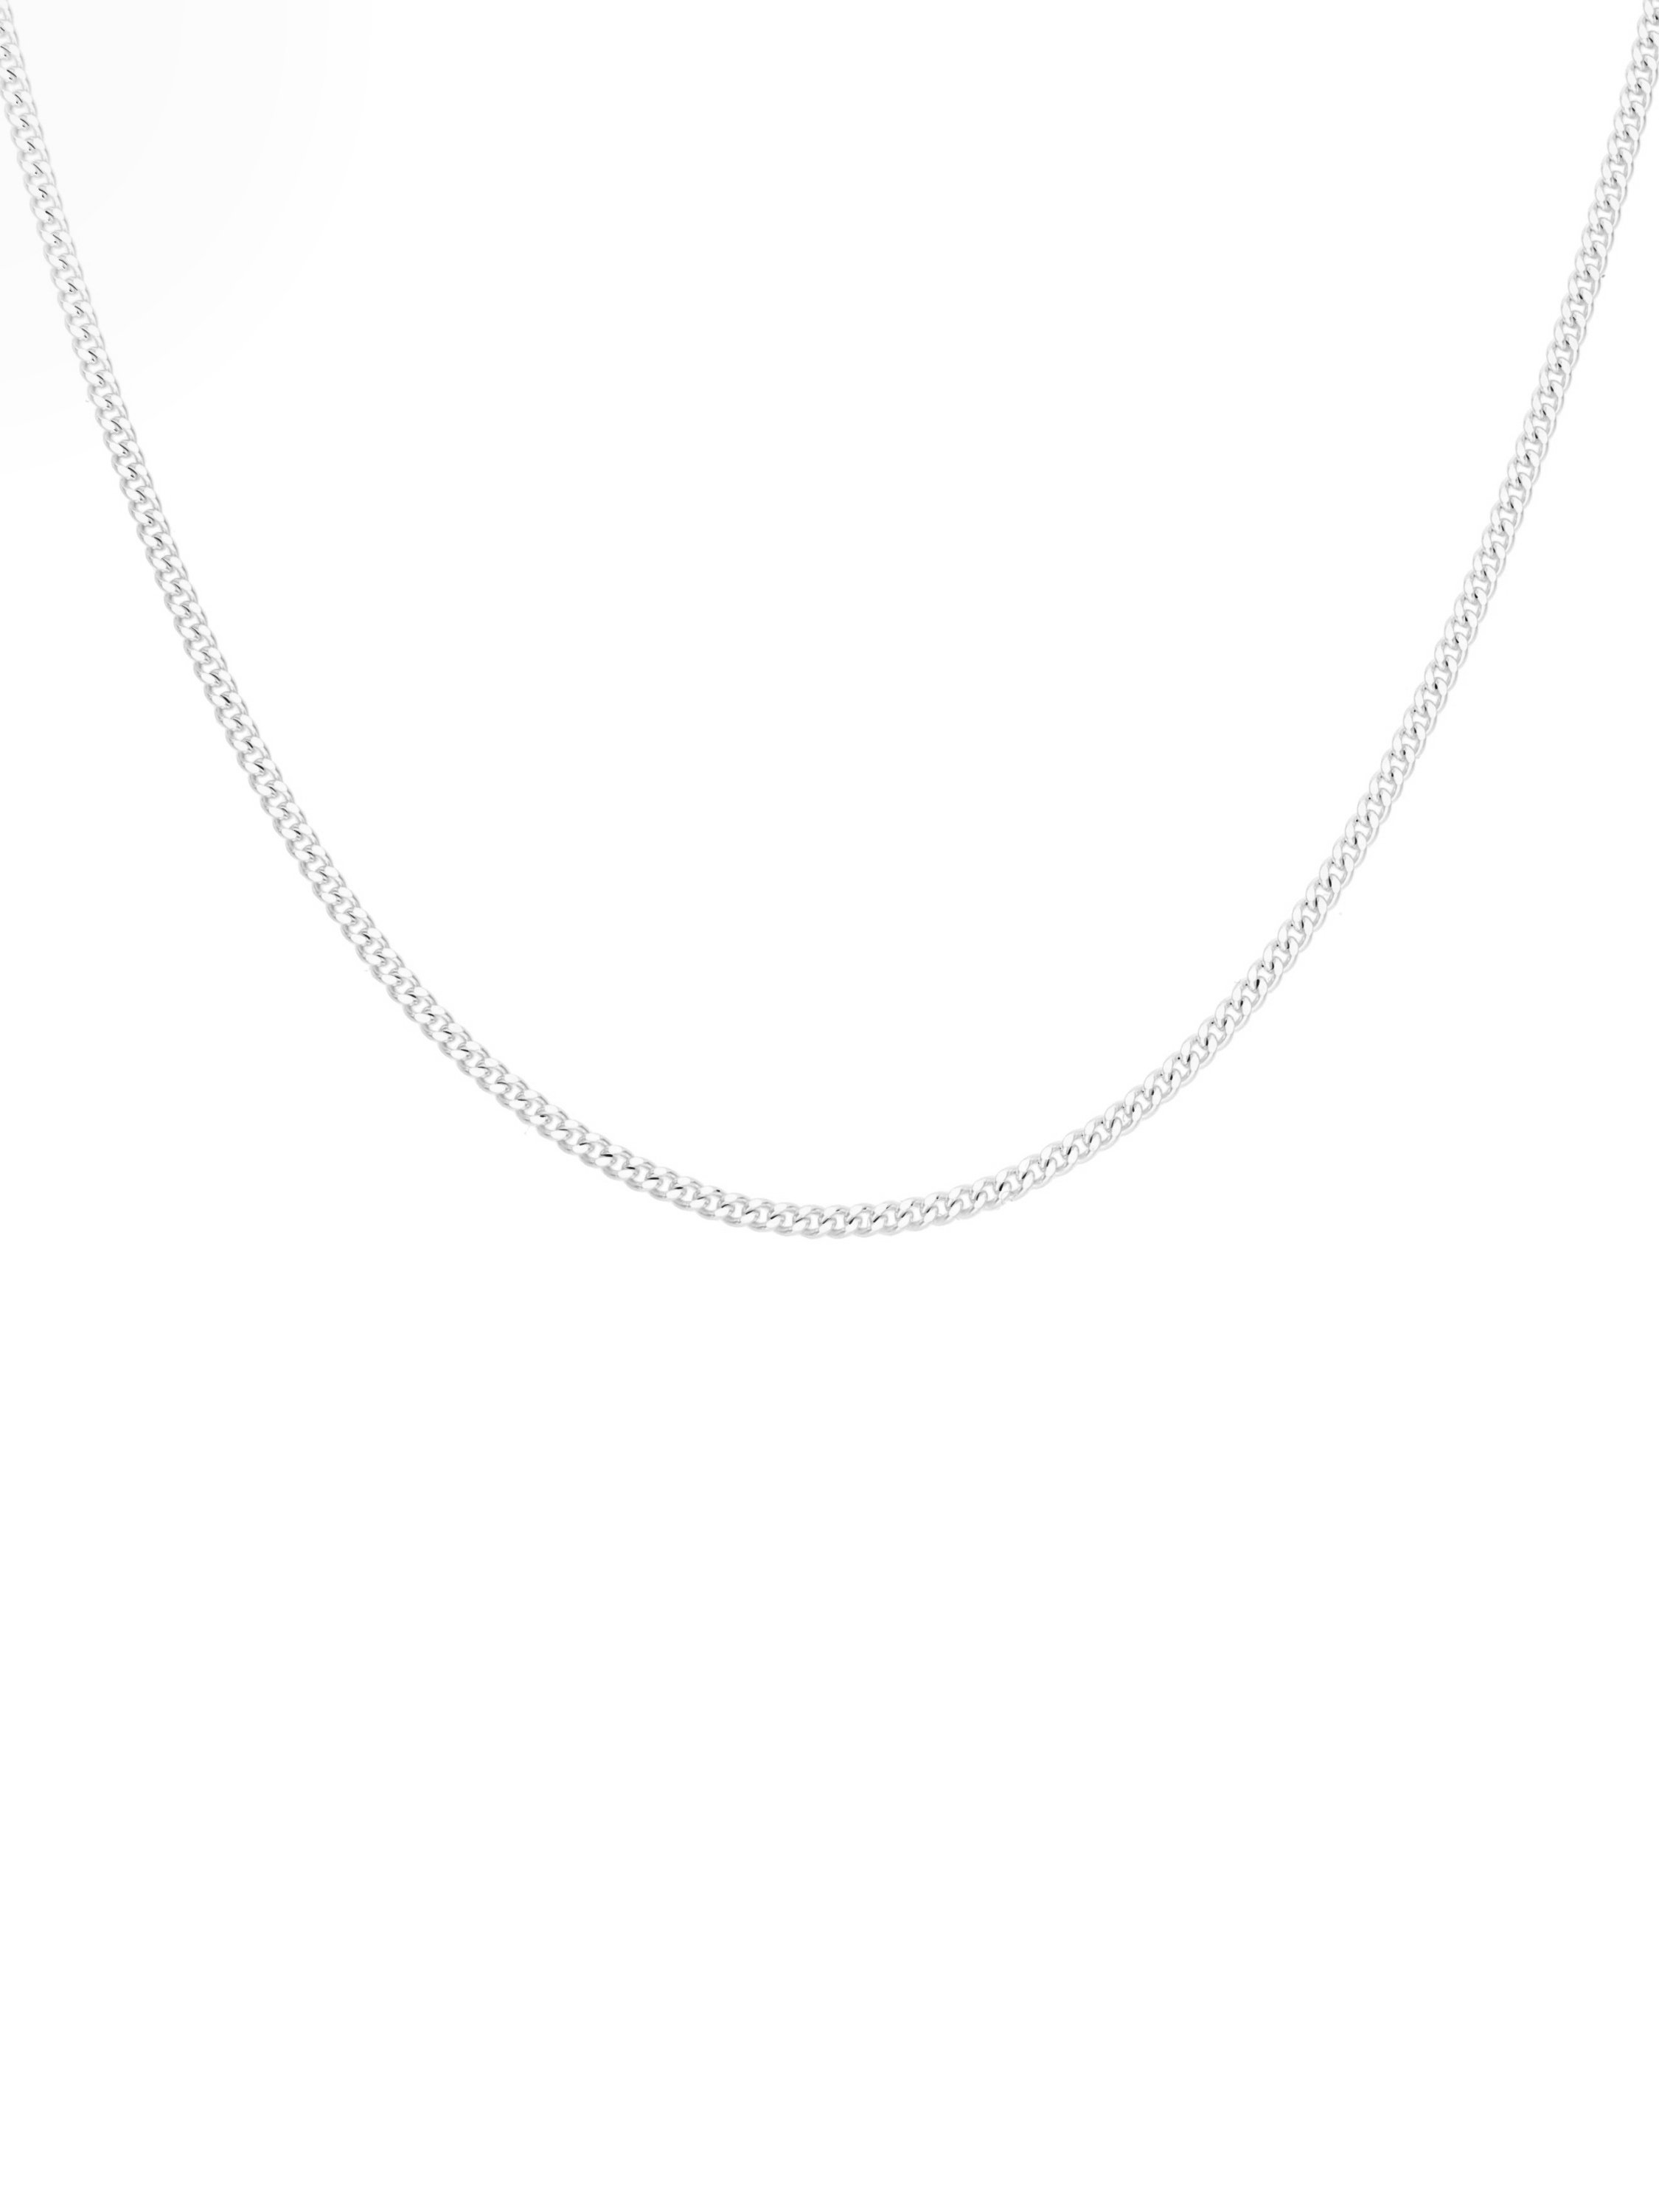 Coed - Silberkette Silber Federring - Breite 1,4 mm - Länge 45 cm